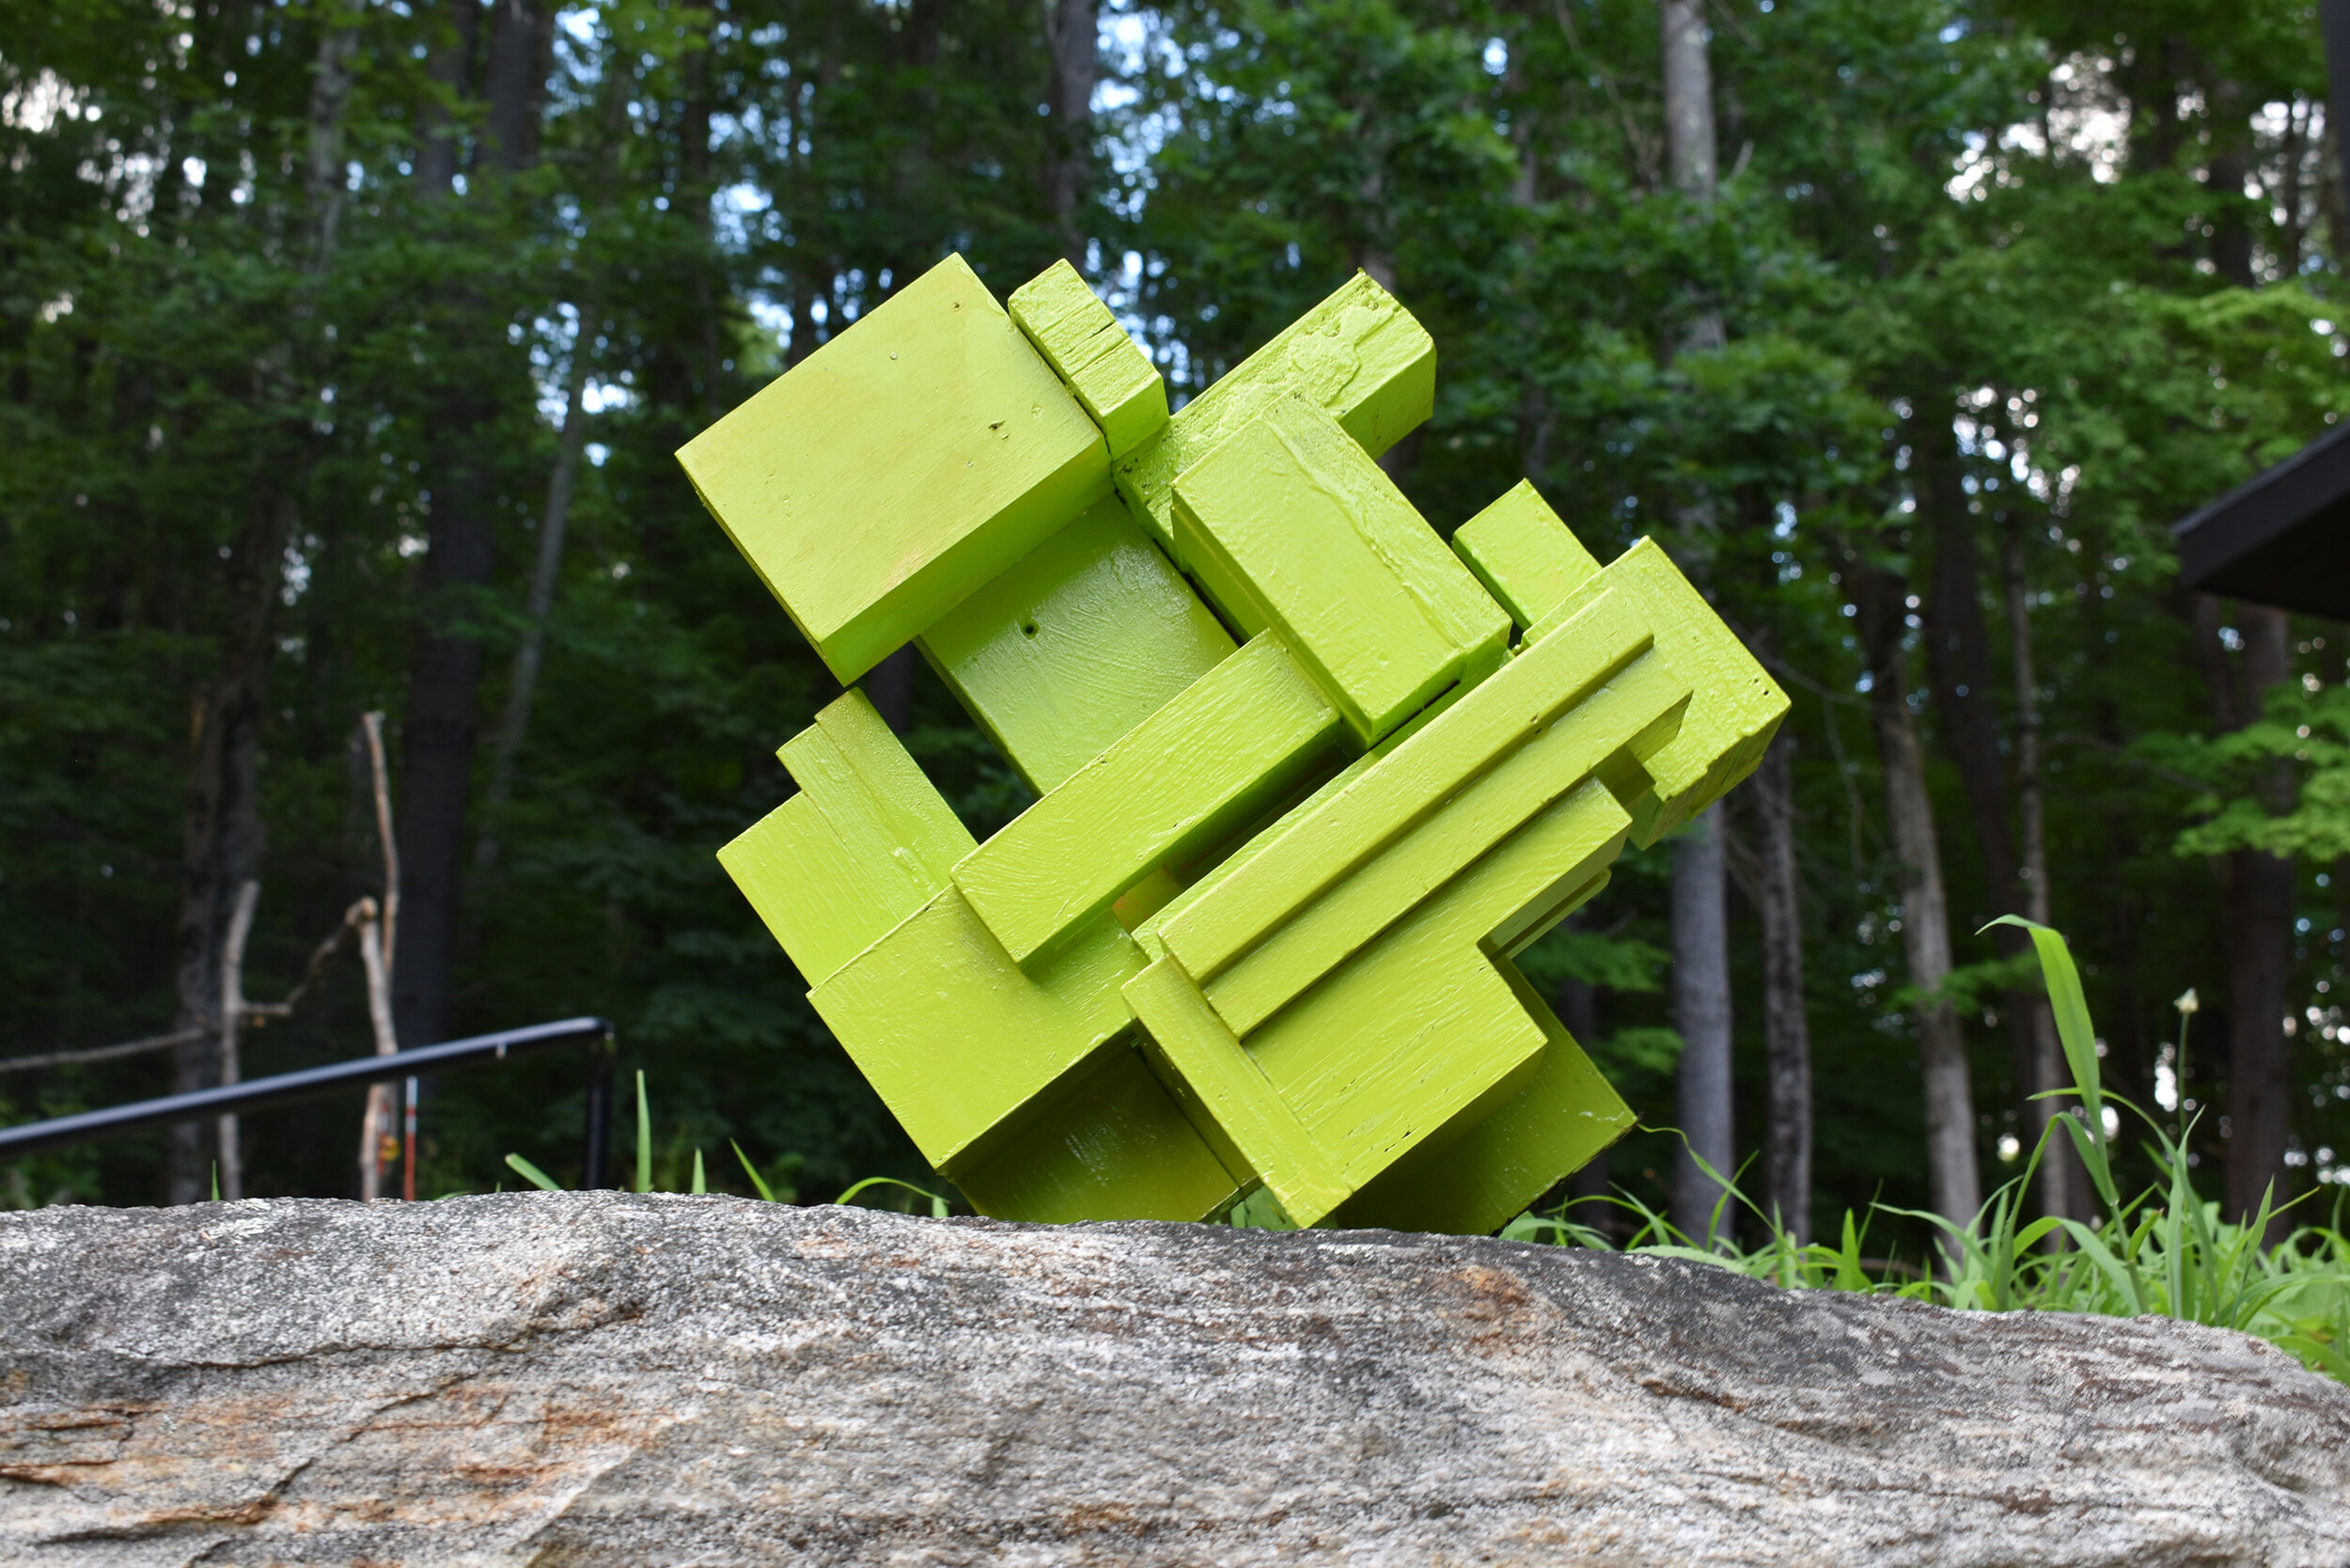 Maine_Stephen_Portable Modernist Sculpture_2 - Stephen Maine.jpg